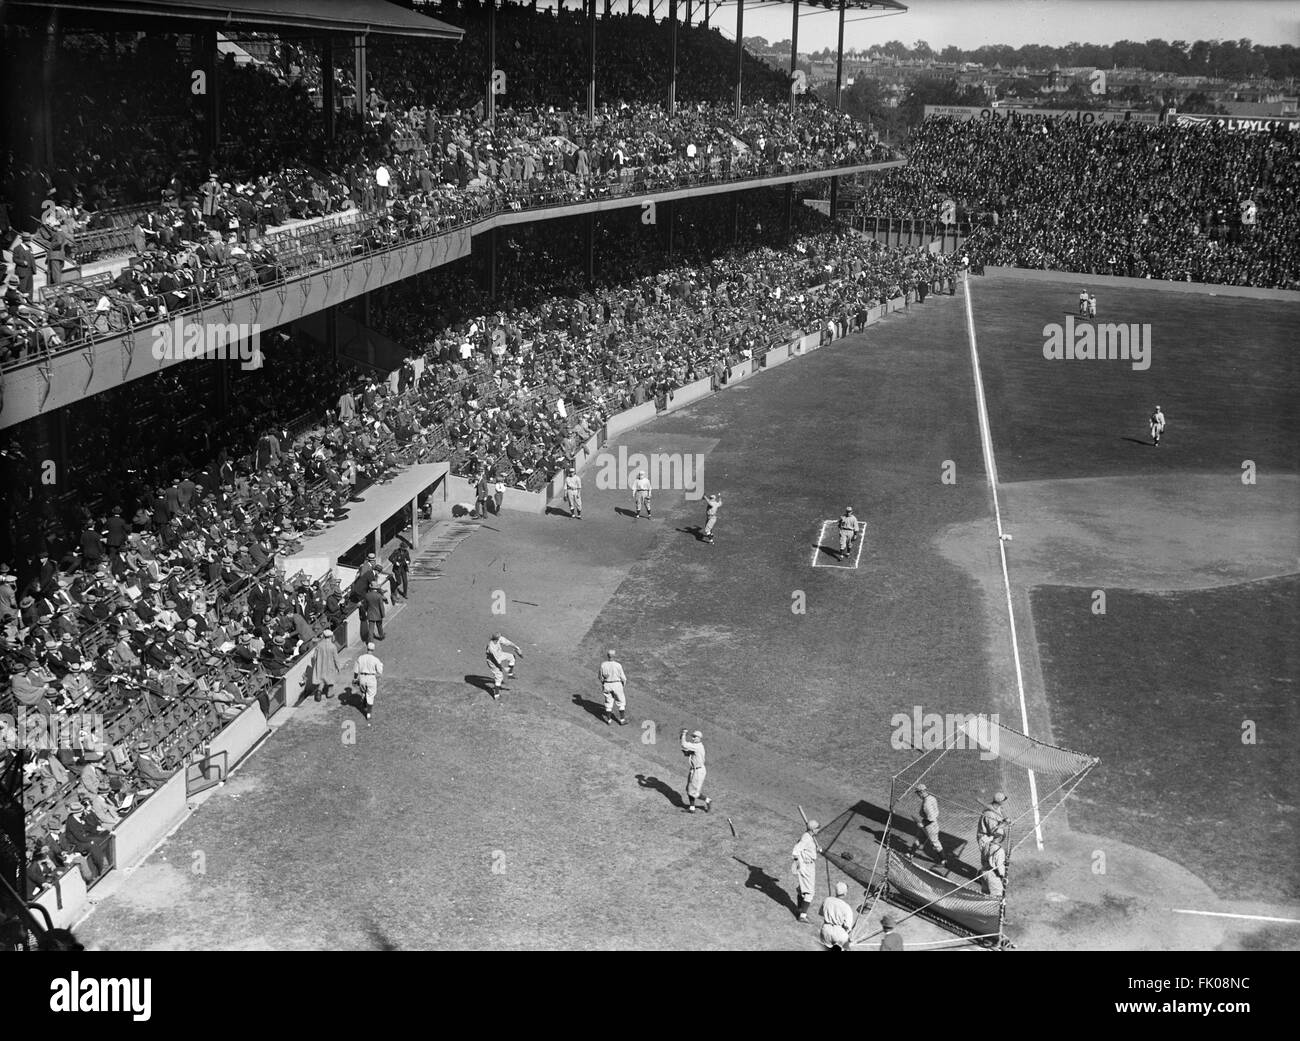 Historical baseball stadium hi-res stock photography and images - Alamy